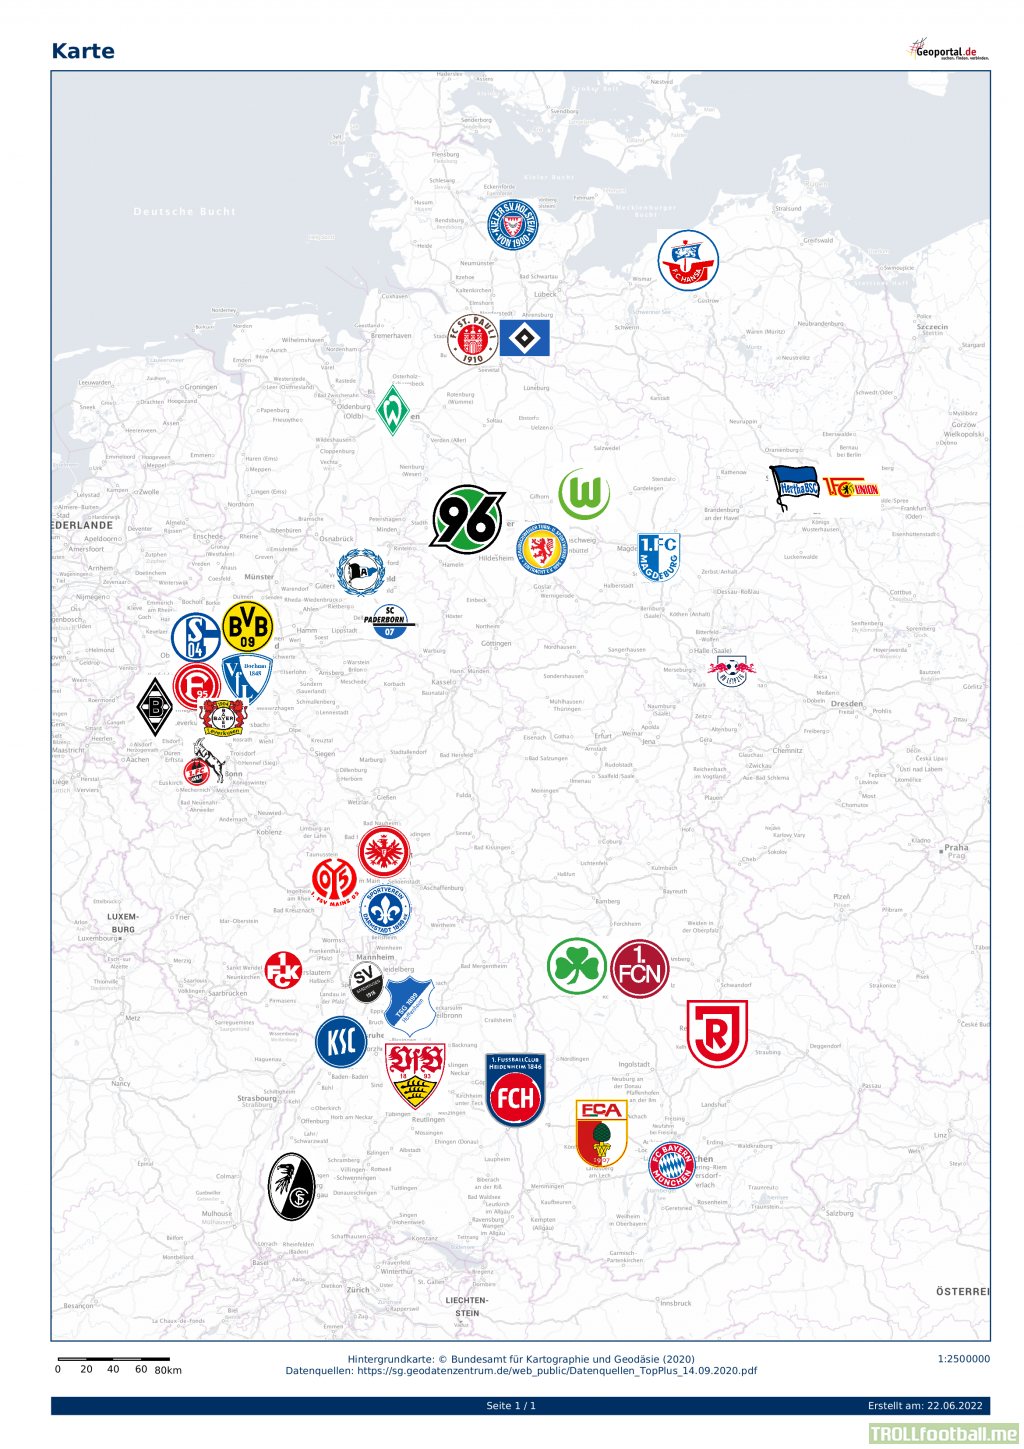 As requested, I created a map with the locations of all 36 Bundesliga clubs (Bundesliga and Bundesliga 2) of the 2022/23 season.